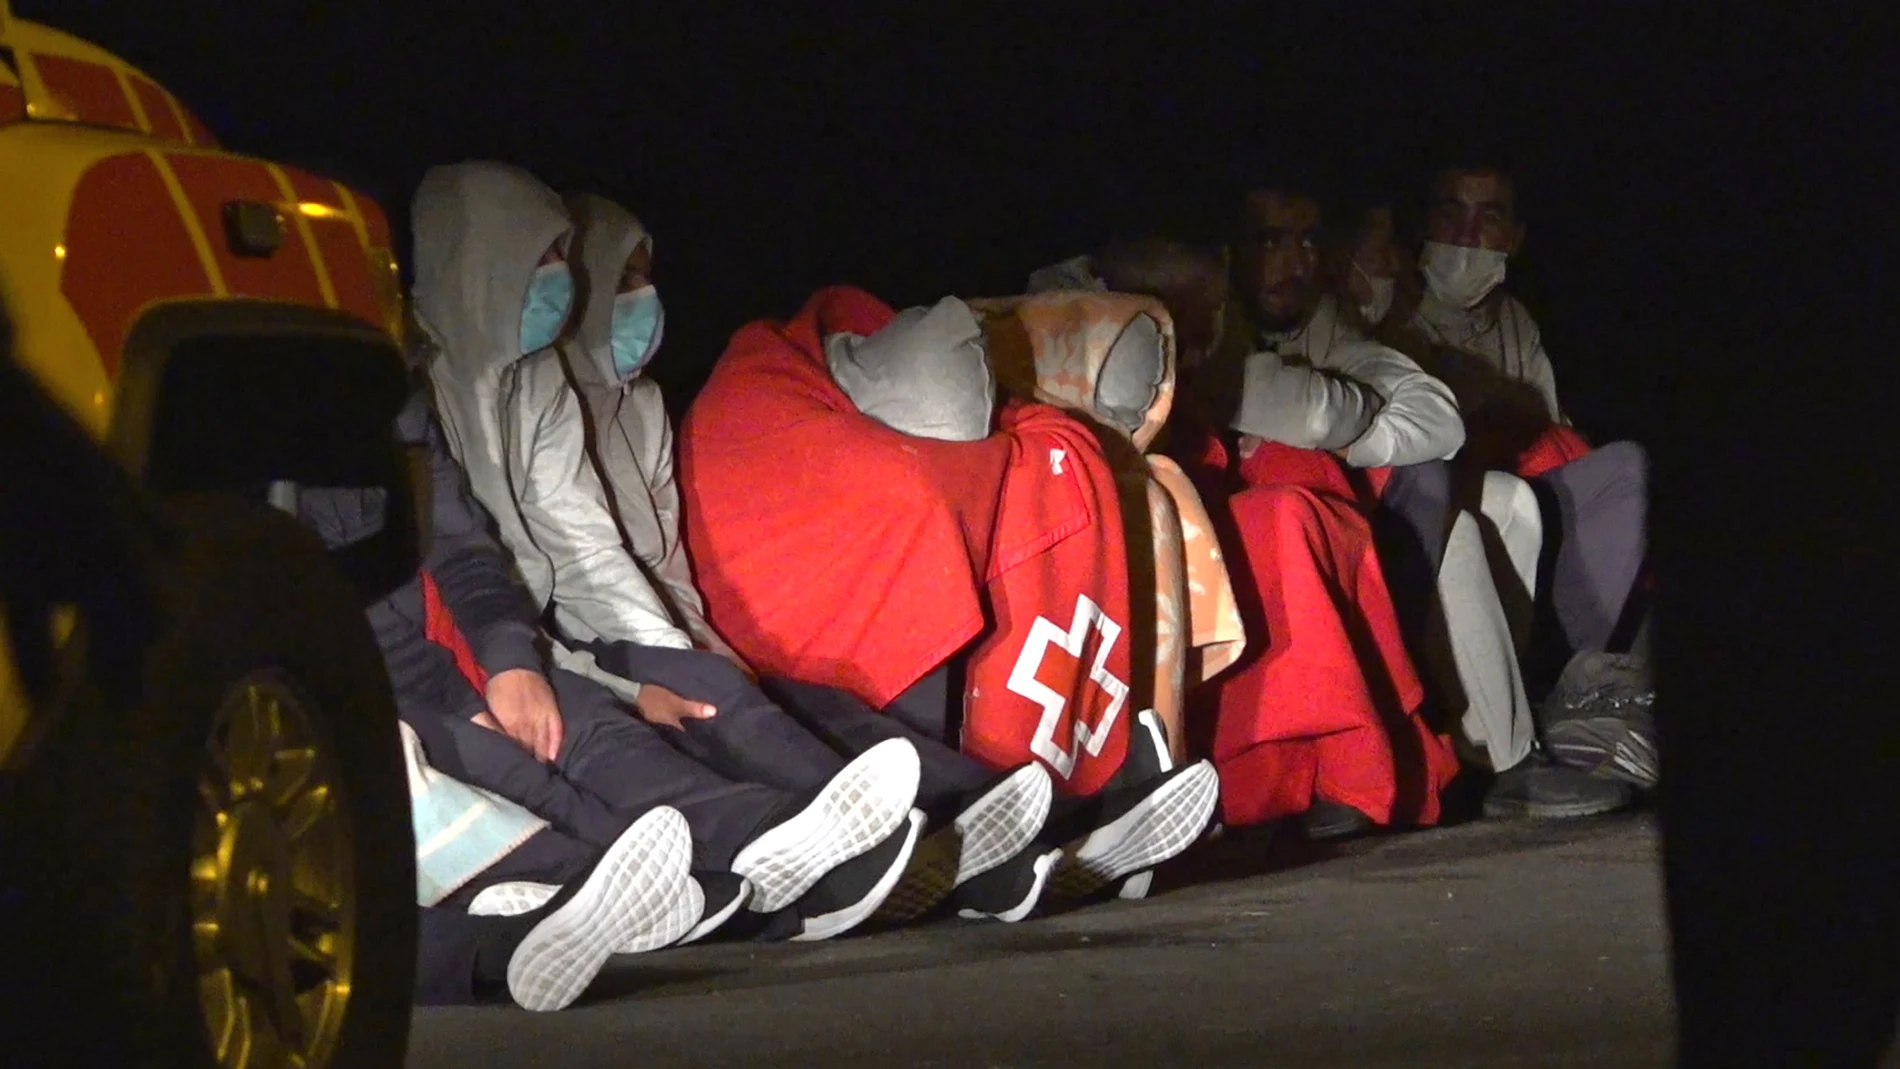 Tapadas con mantas de Cruz Roja. inmigrantes llegados por mar a España